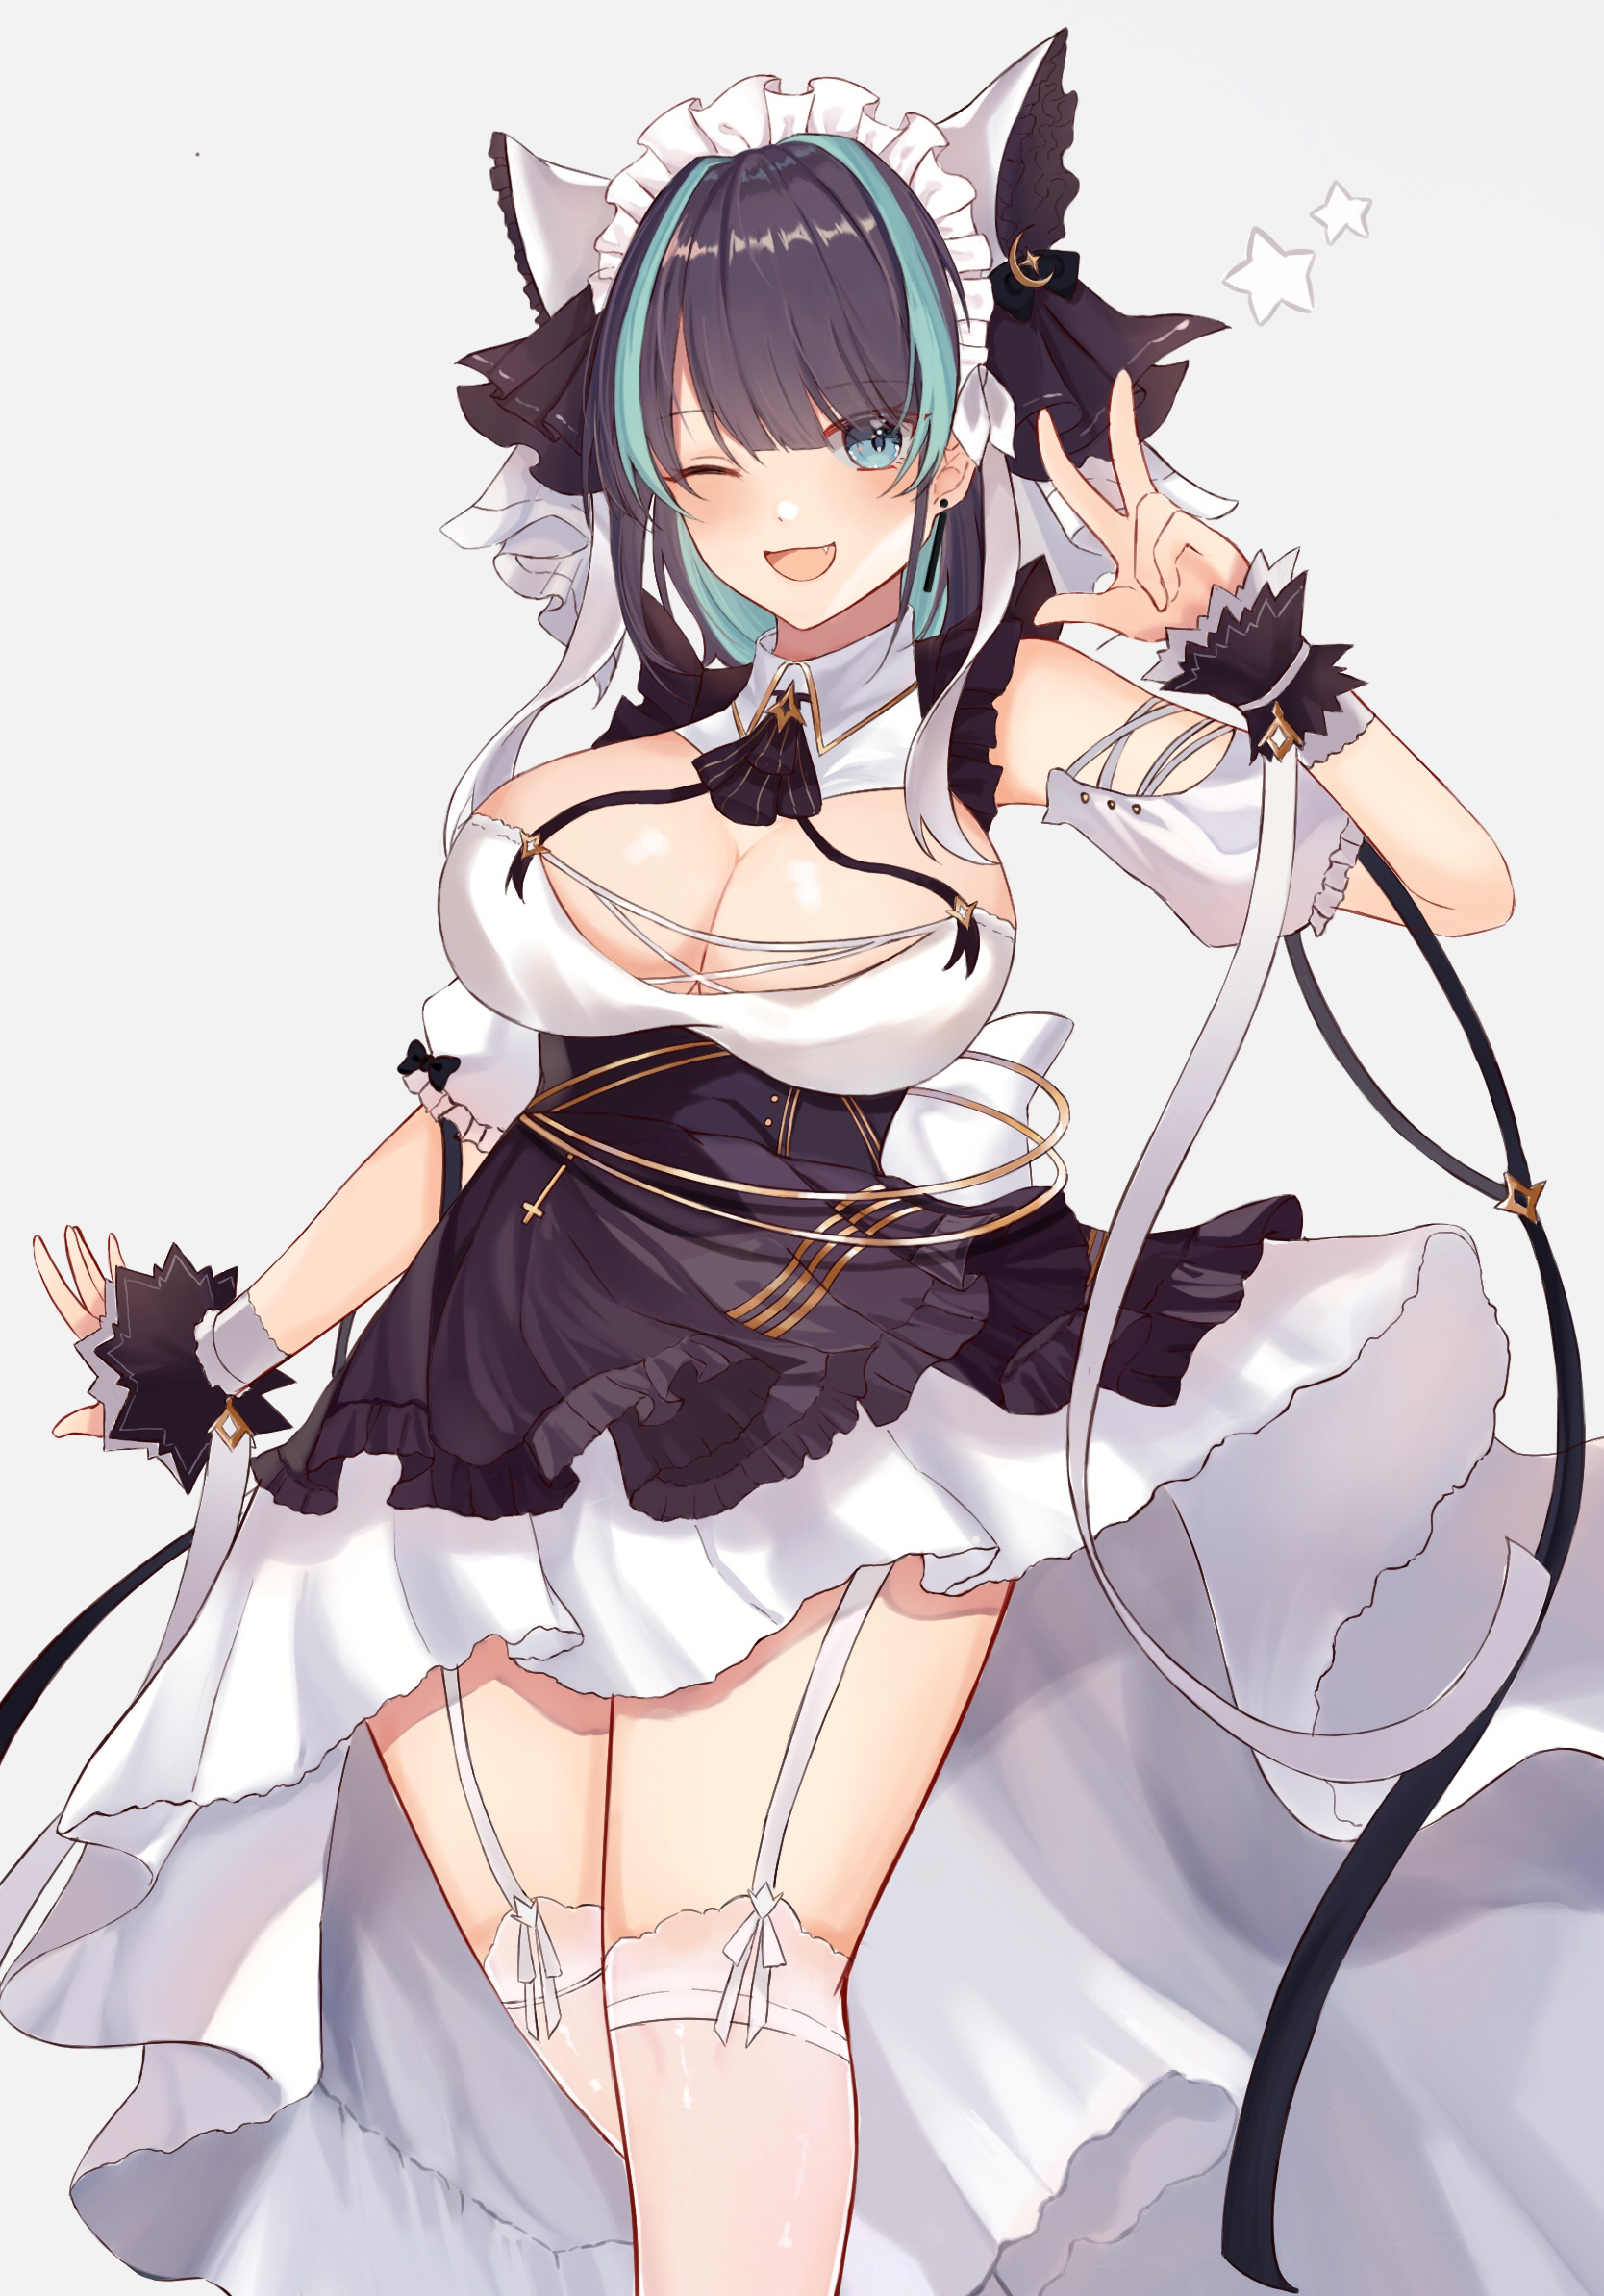 Anime 1668x2388 anime girls Azur Lane Cheshire (Azur Lane) white stockings garter straps smiling Ki-san maid outfit no bra cleavage big boobs